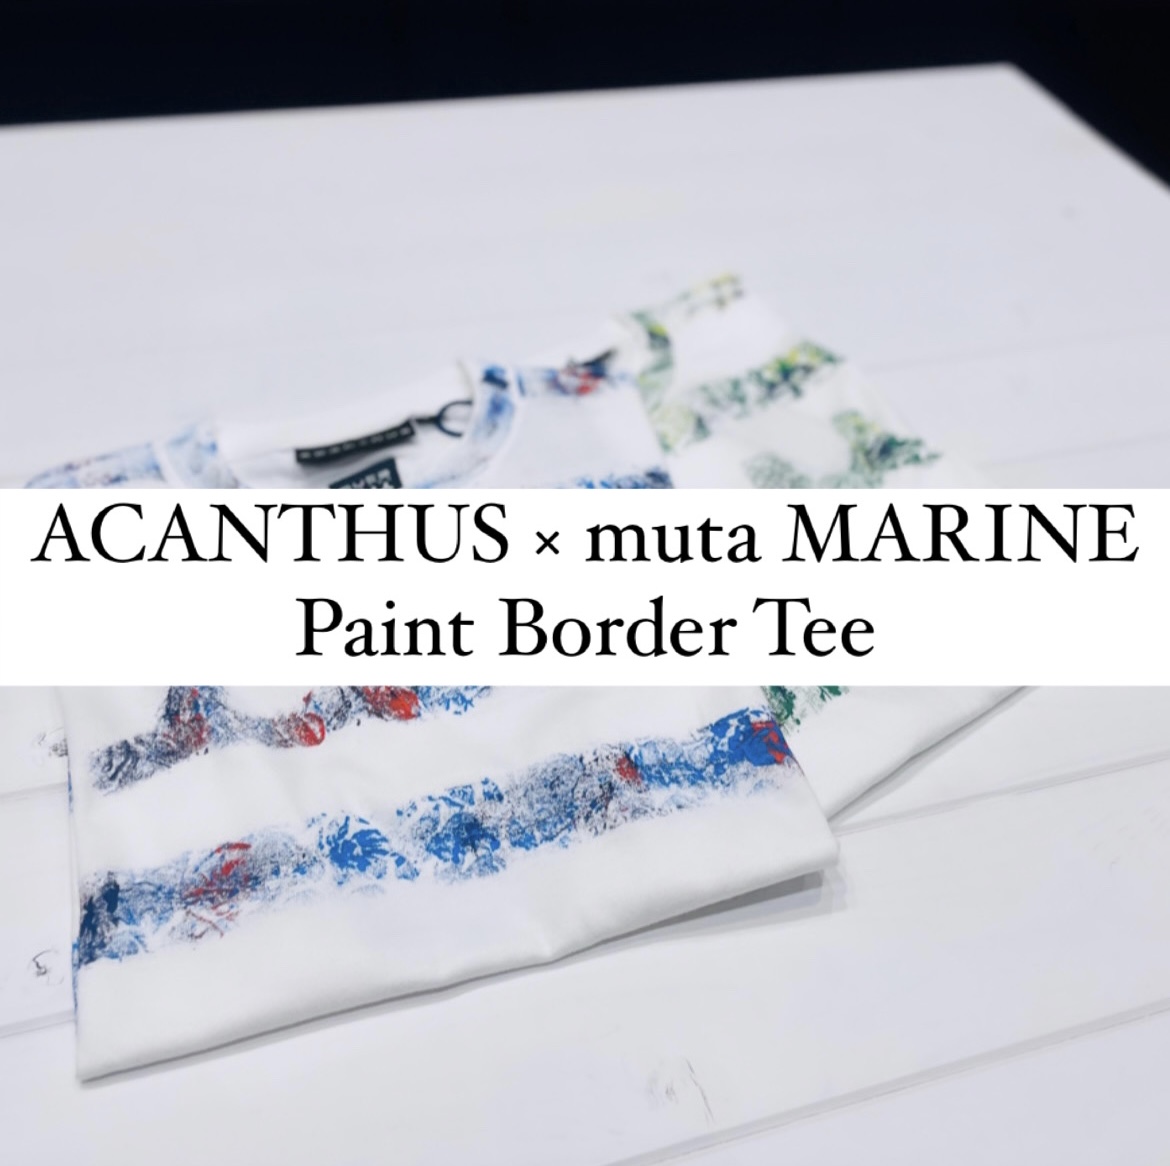 ACANTHUS × muta MARINE Paint Border Tee